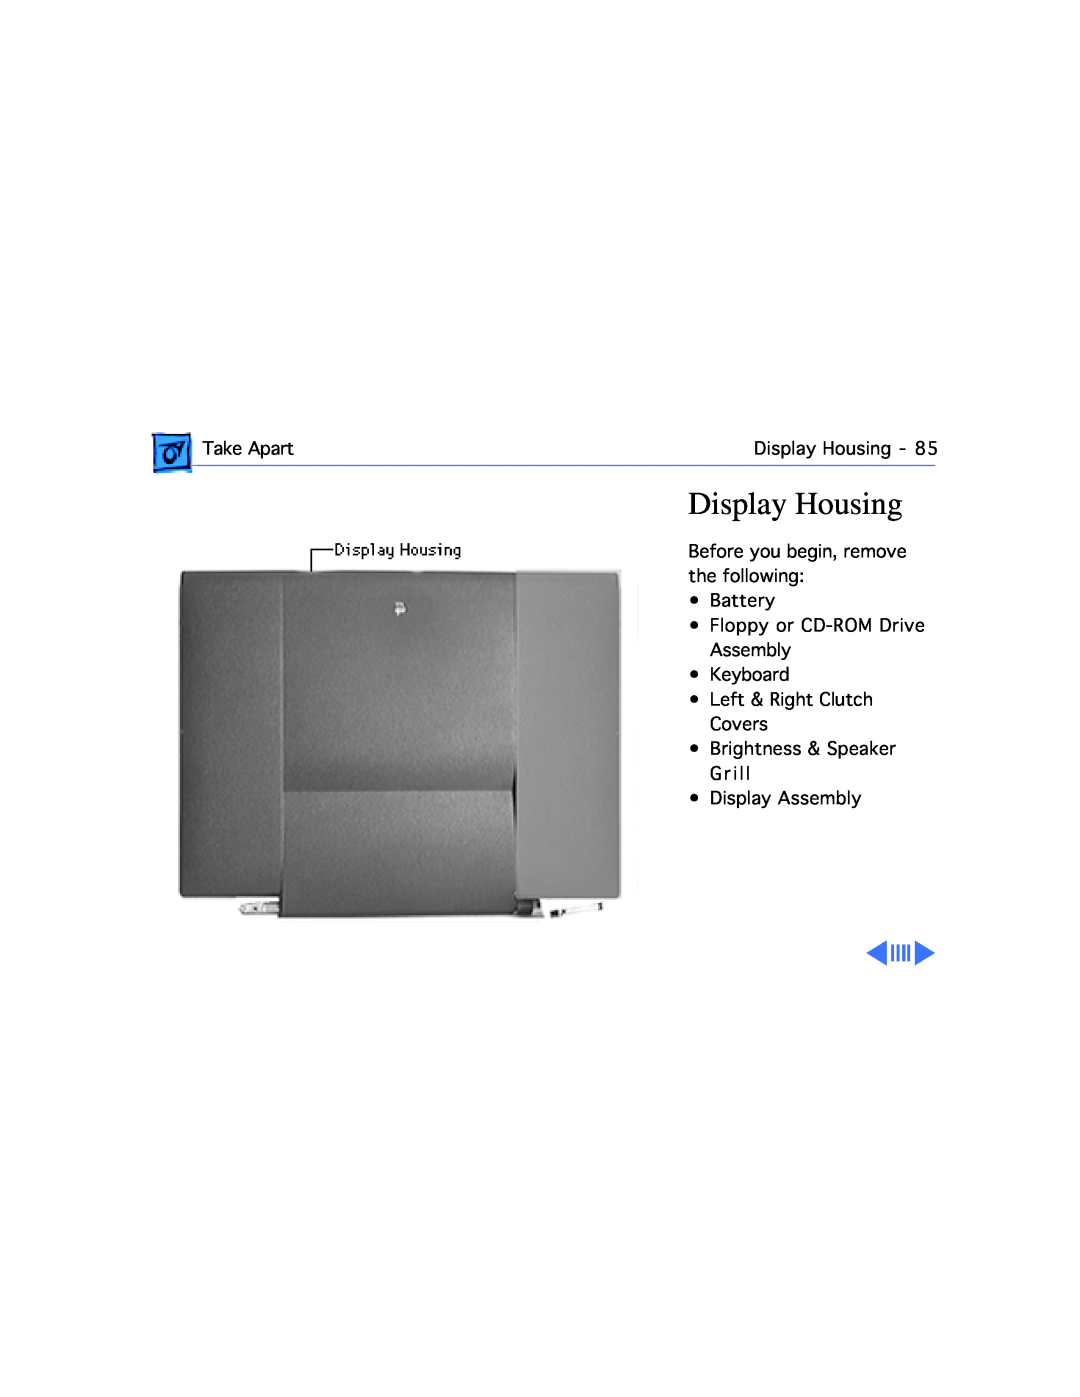 Apple G3, 3400C/200 manual Take ApartDisplay Housing, Brightness & Speaker Grill Display Assembly 